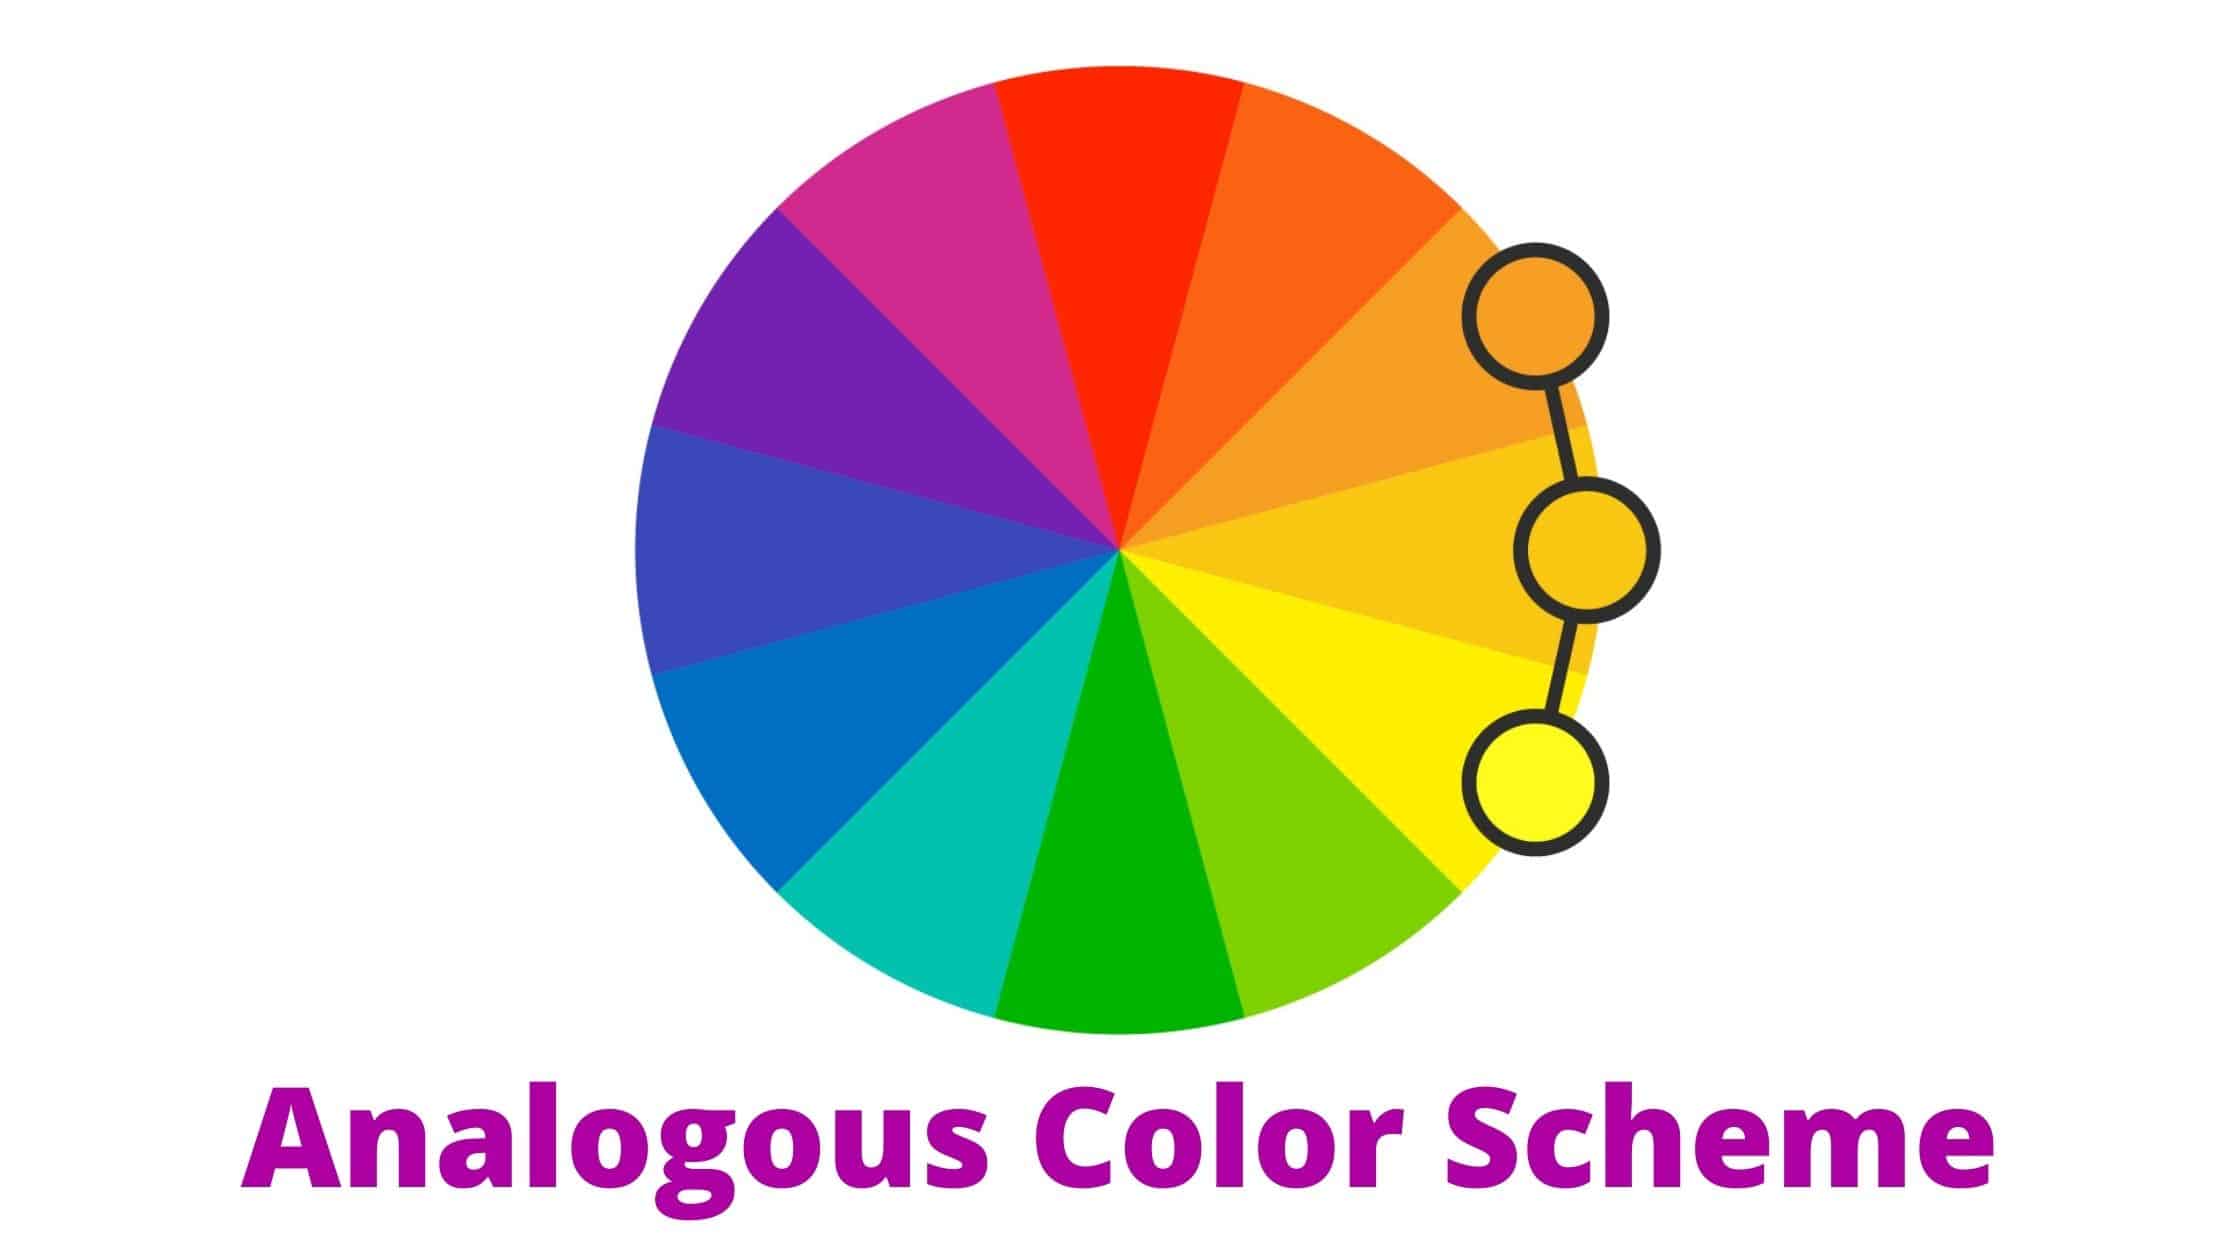 https://kripesh.b-cdn.net/wp-content/uploads/2021/11/Analogous-Color-Scheme.jpg